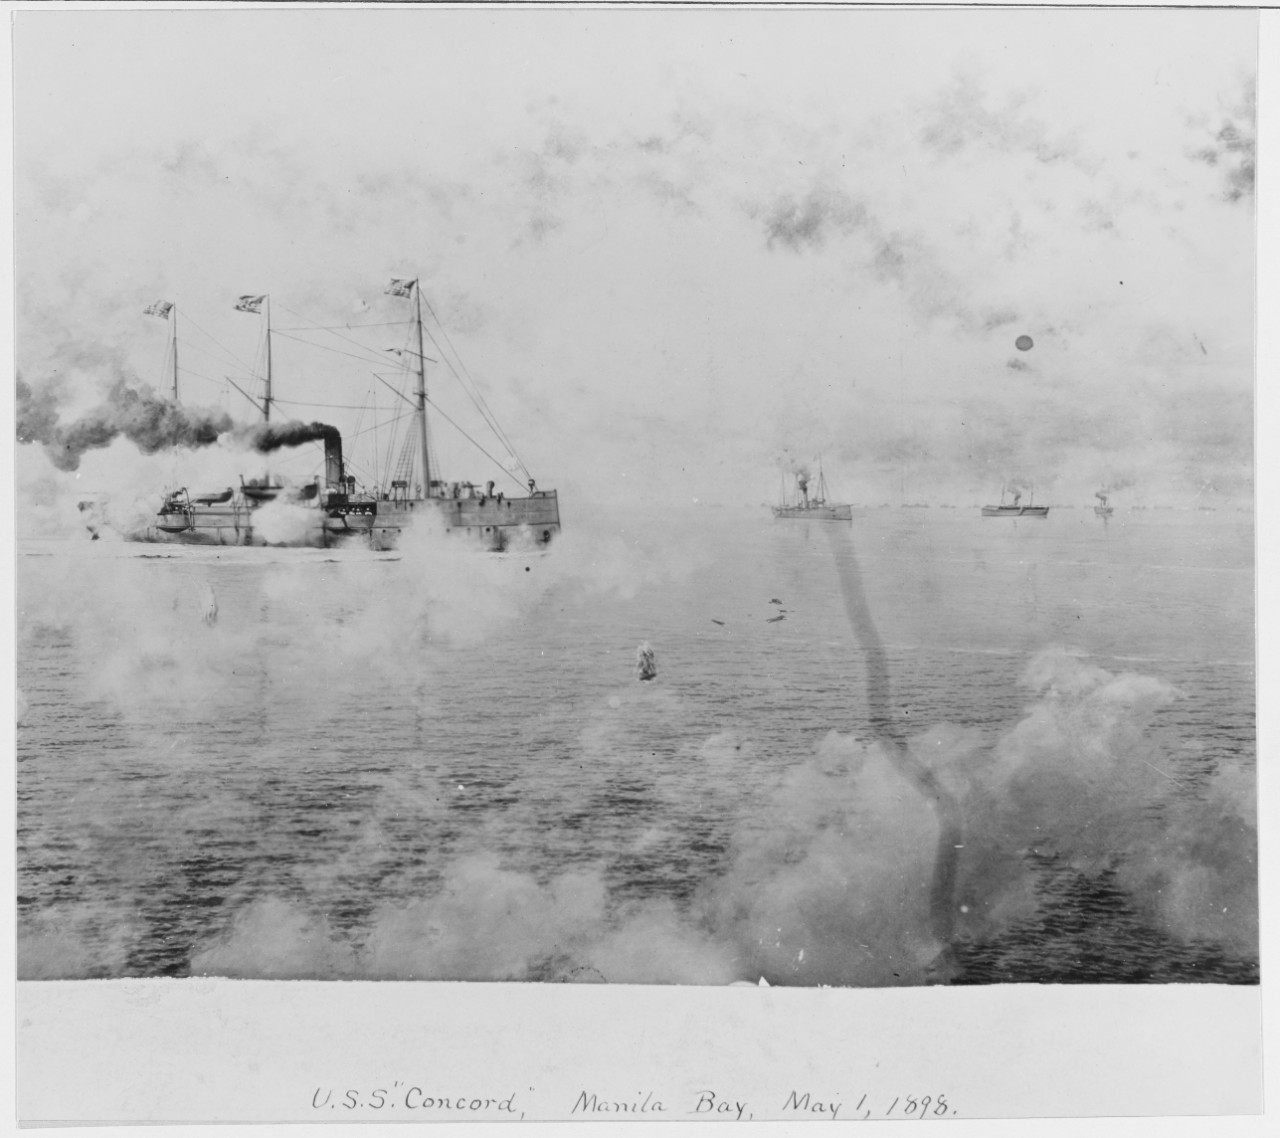 USS PETREL, Manila Bay, May 1, 1898